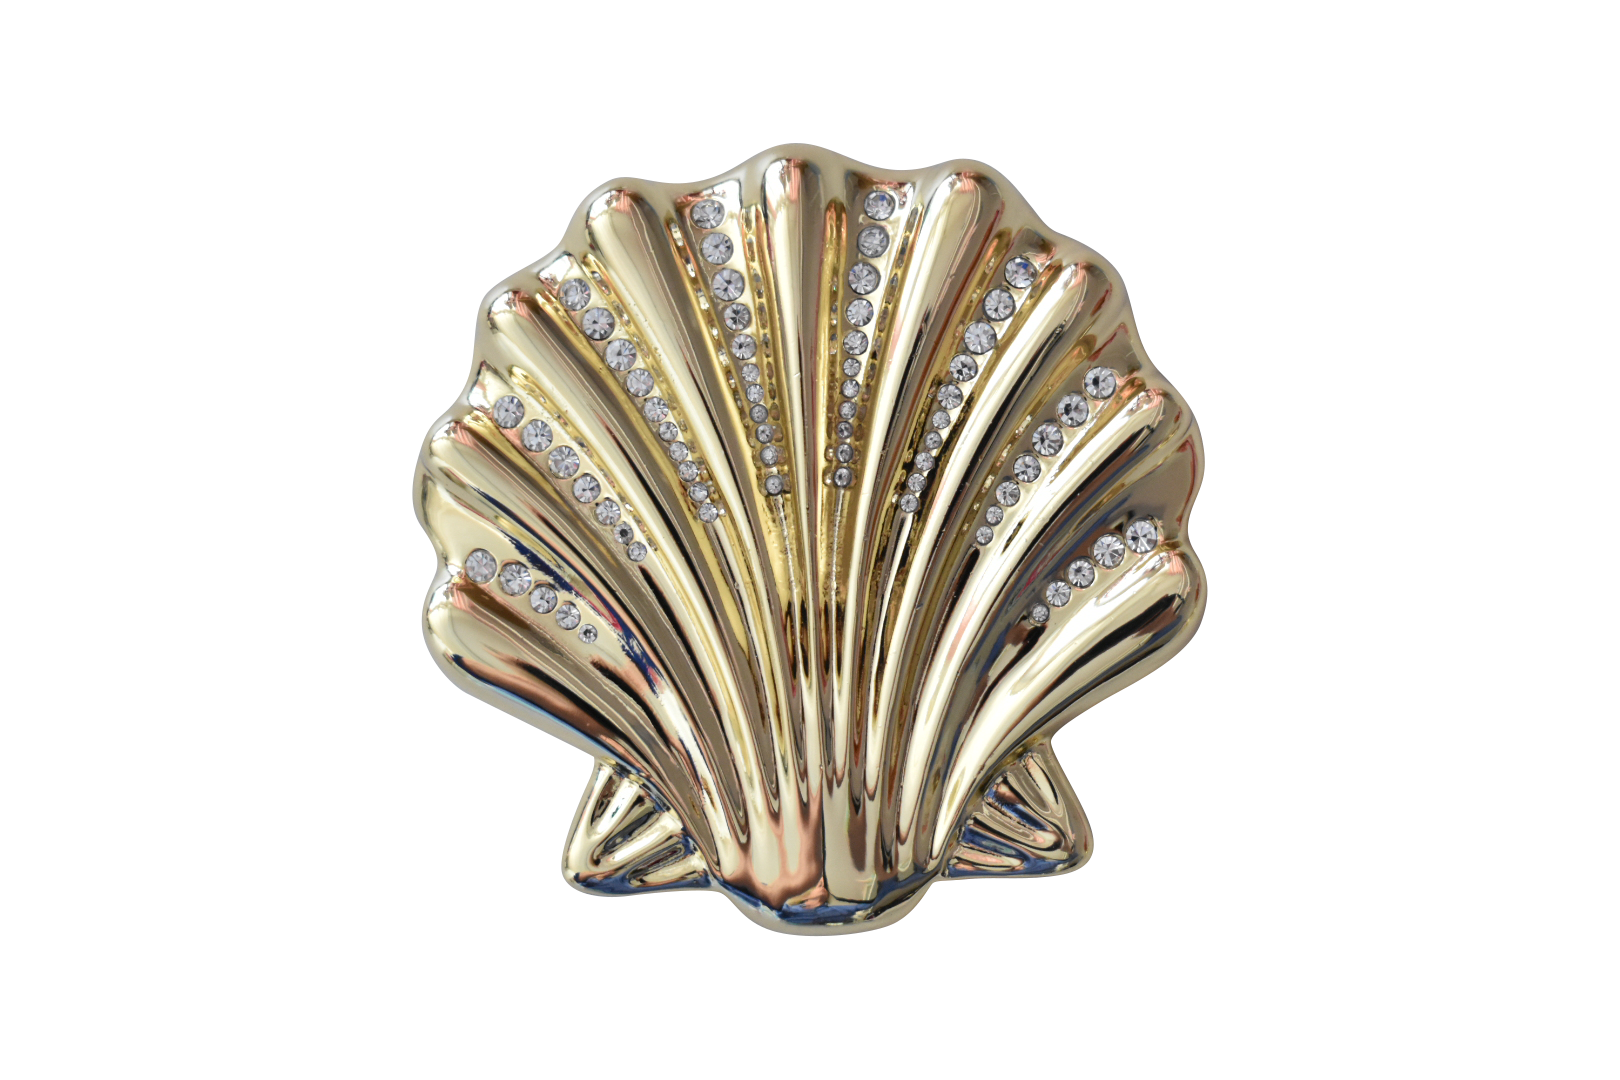 Golden Jewel Adornment - Seashell